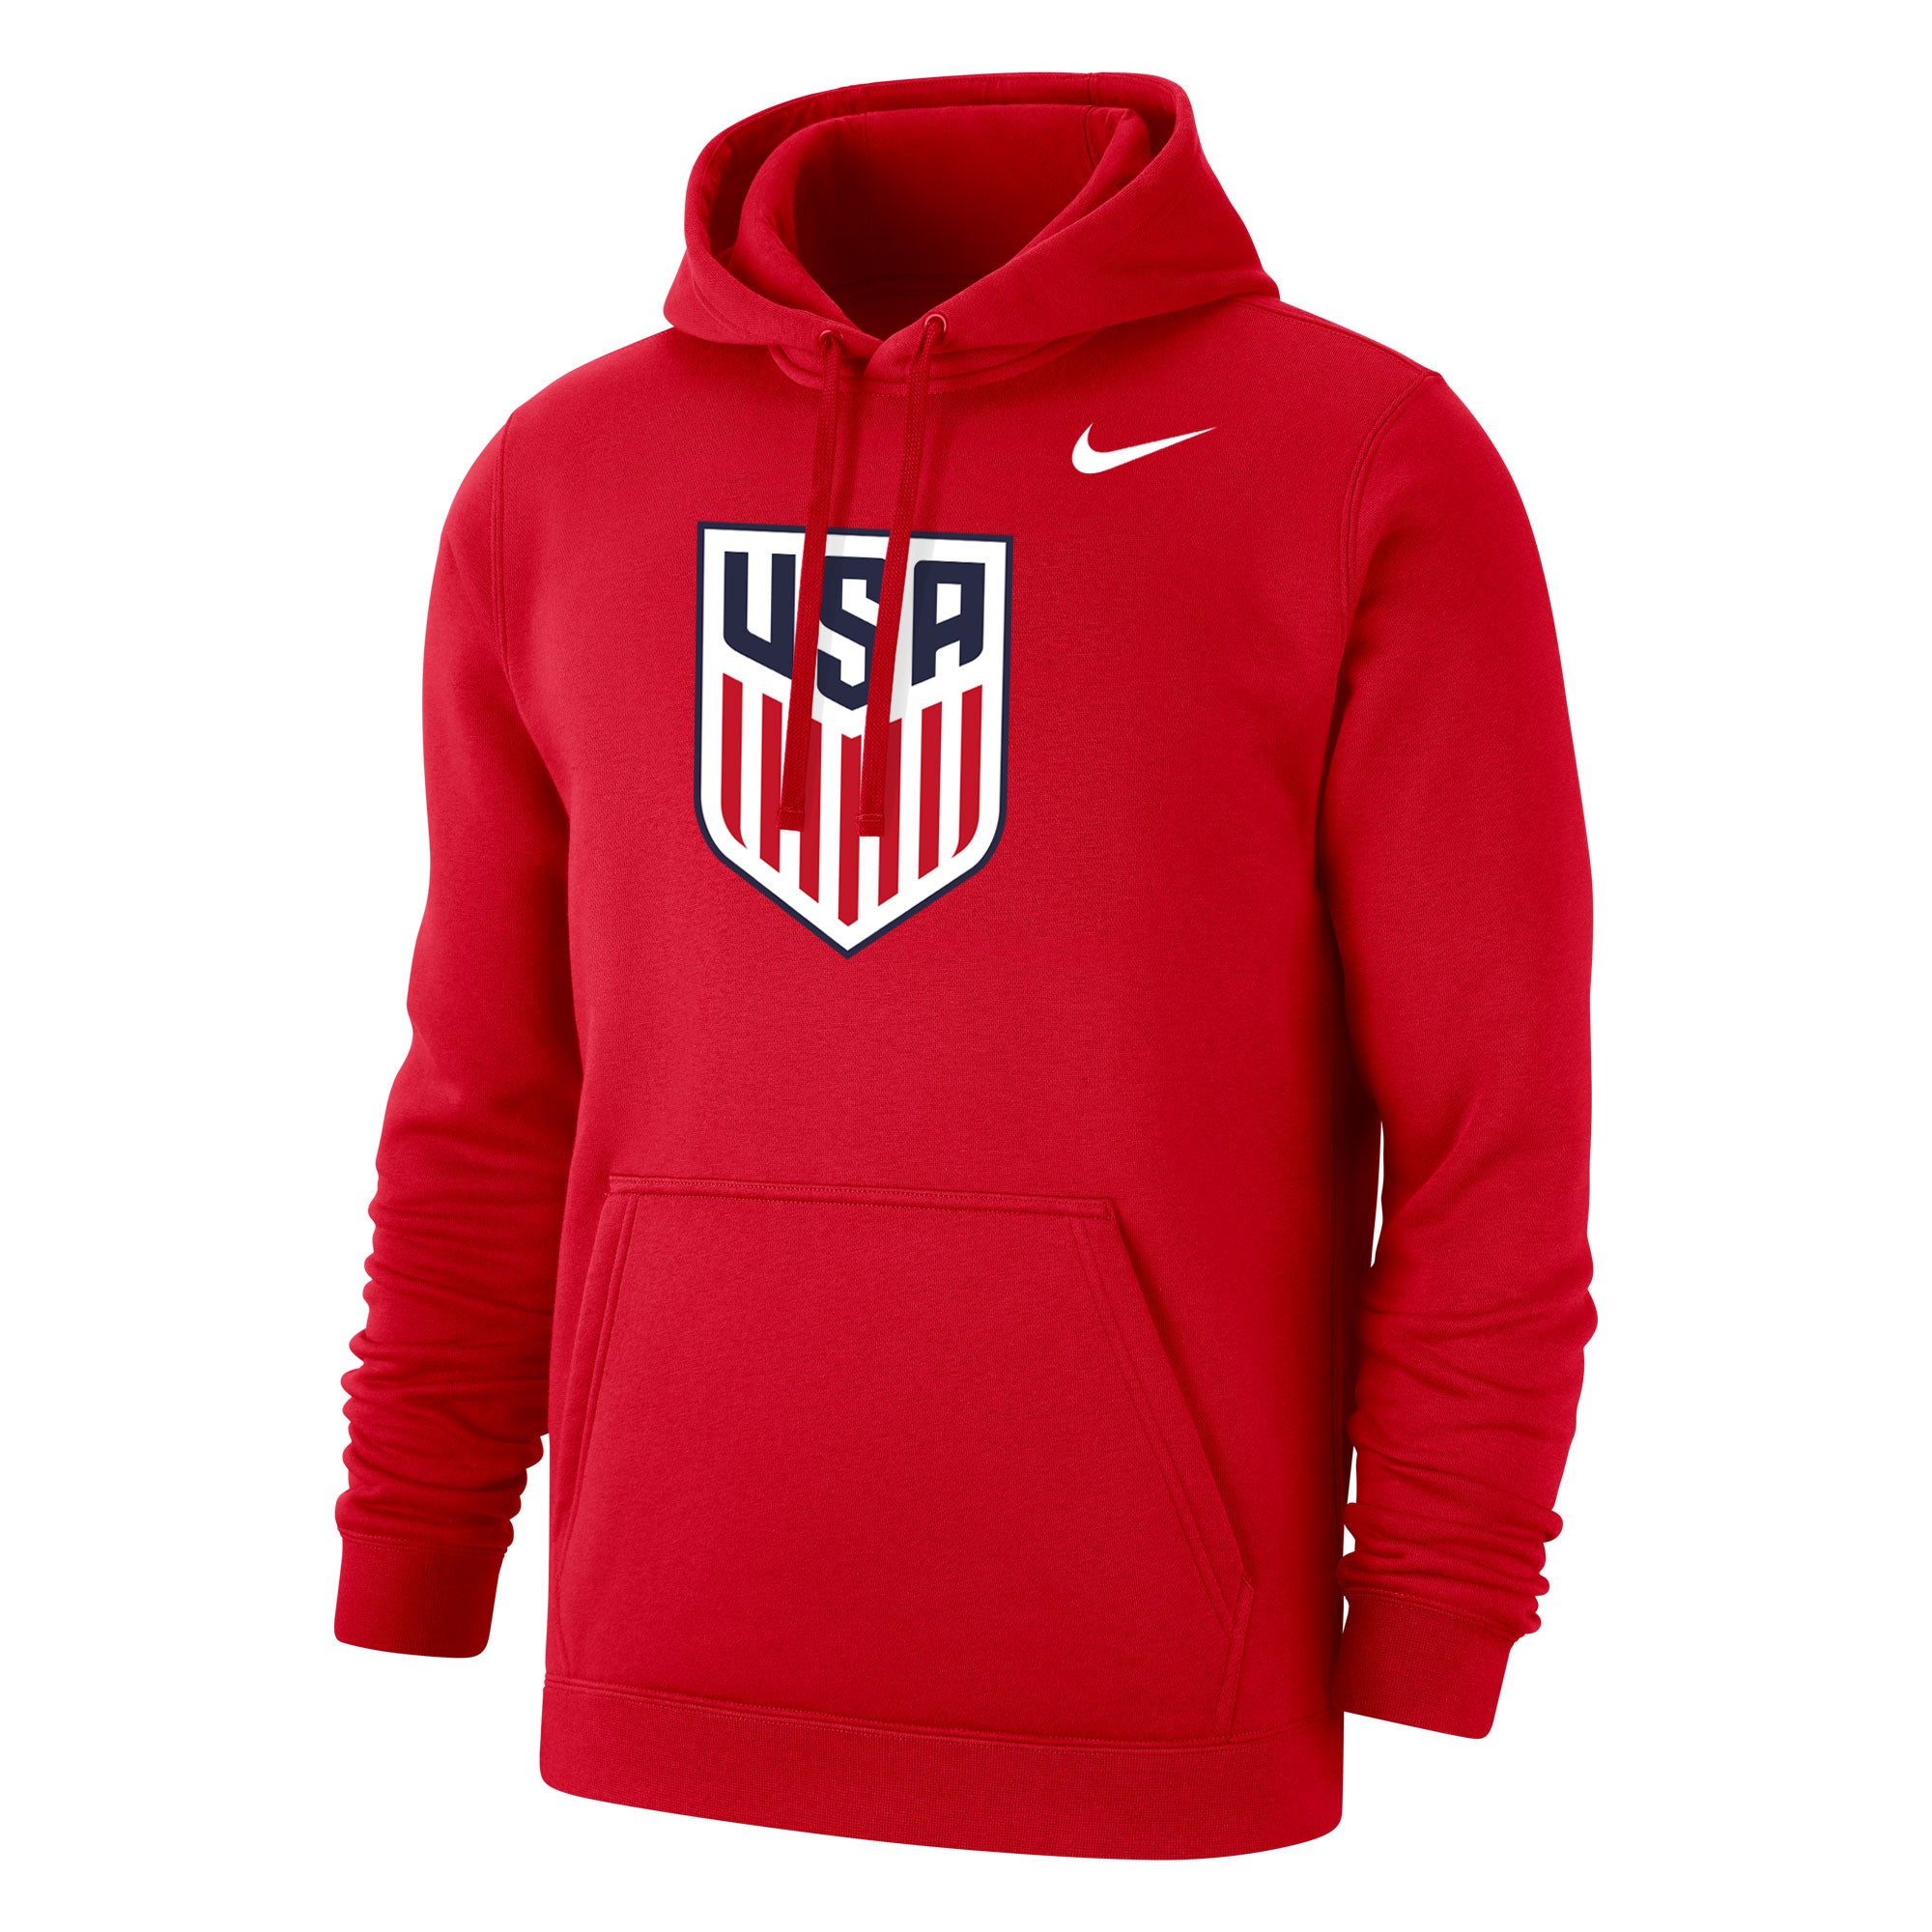 Nike USA Men's Fleece Hoodie